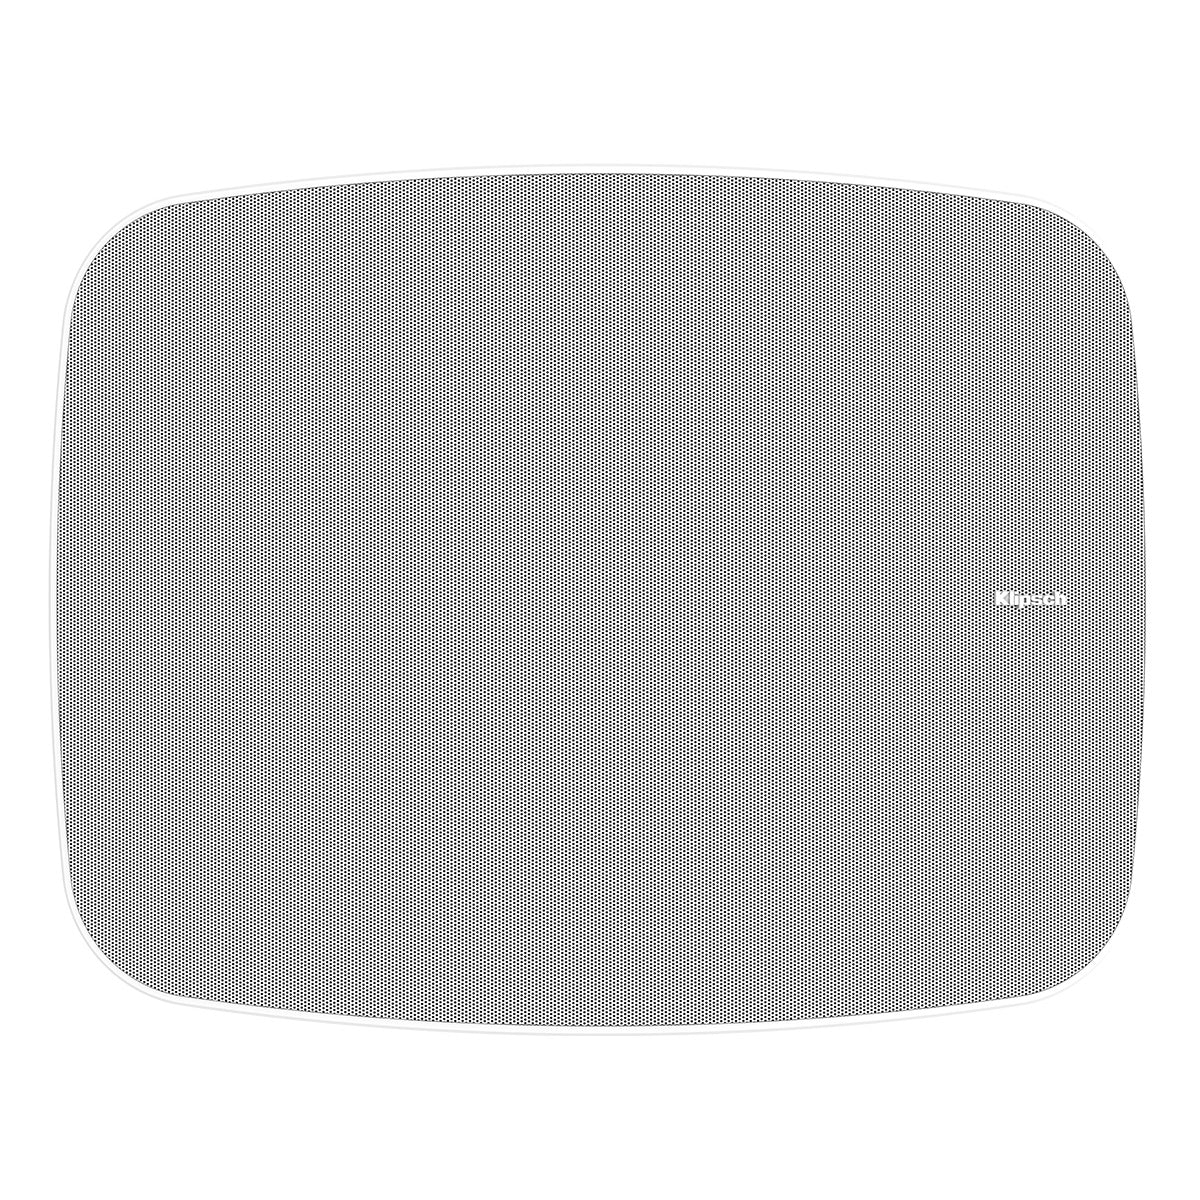 Klipsch RSM-800 Indoor/Outdoor Surface Mount Speakers with 8" Woofer - Pair (White)